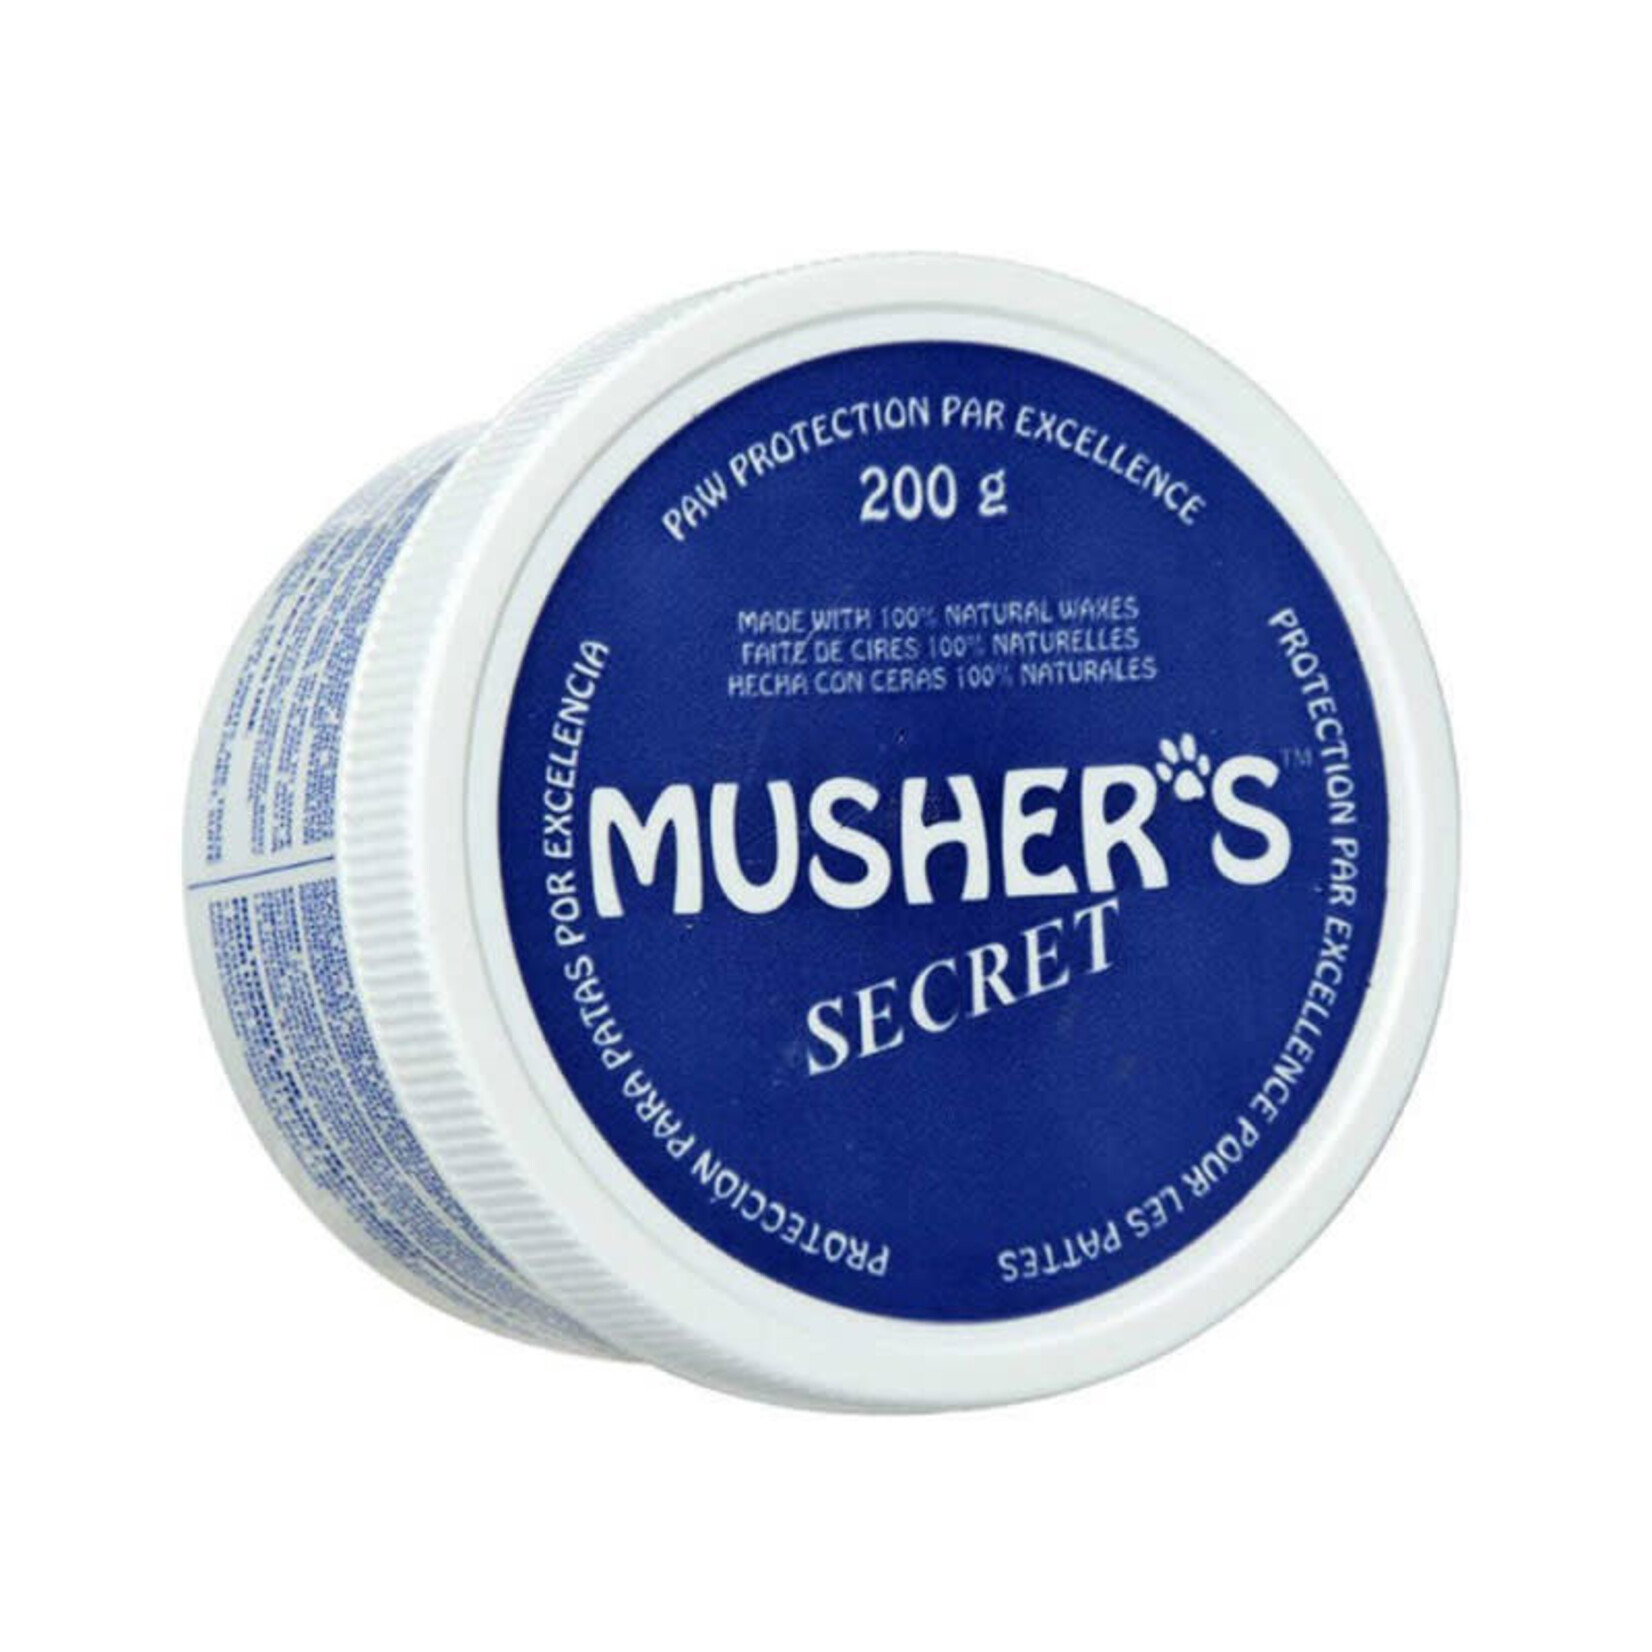 Musher's Secret Musher's Secret - Protection des pattes